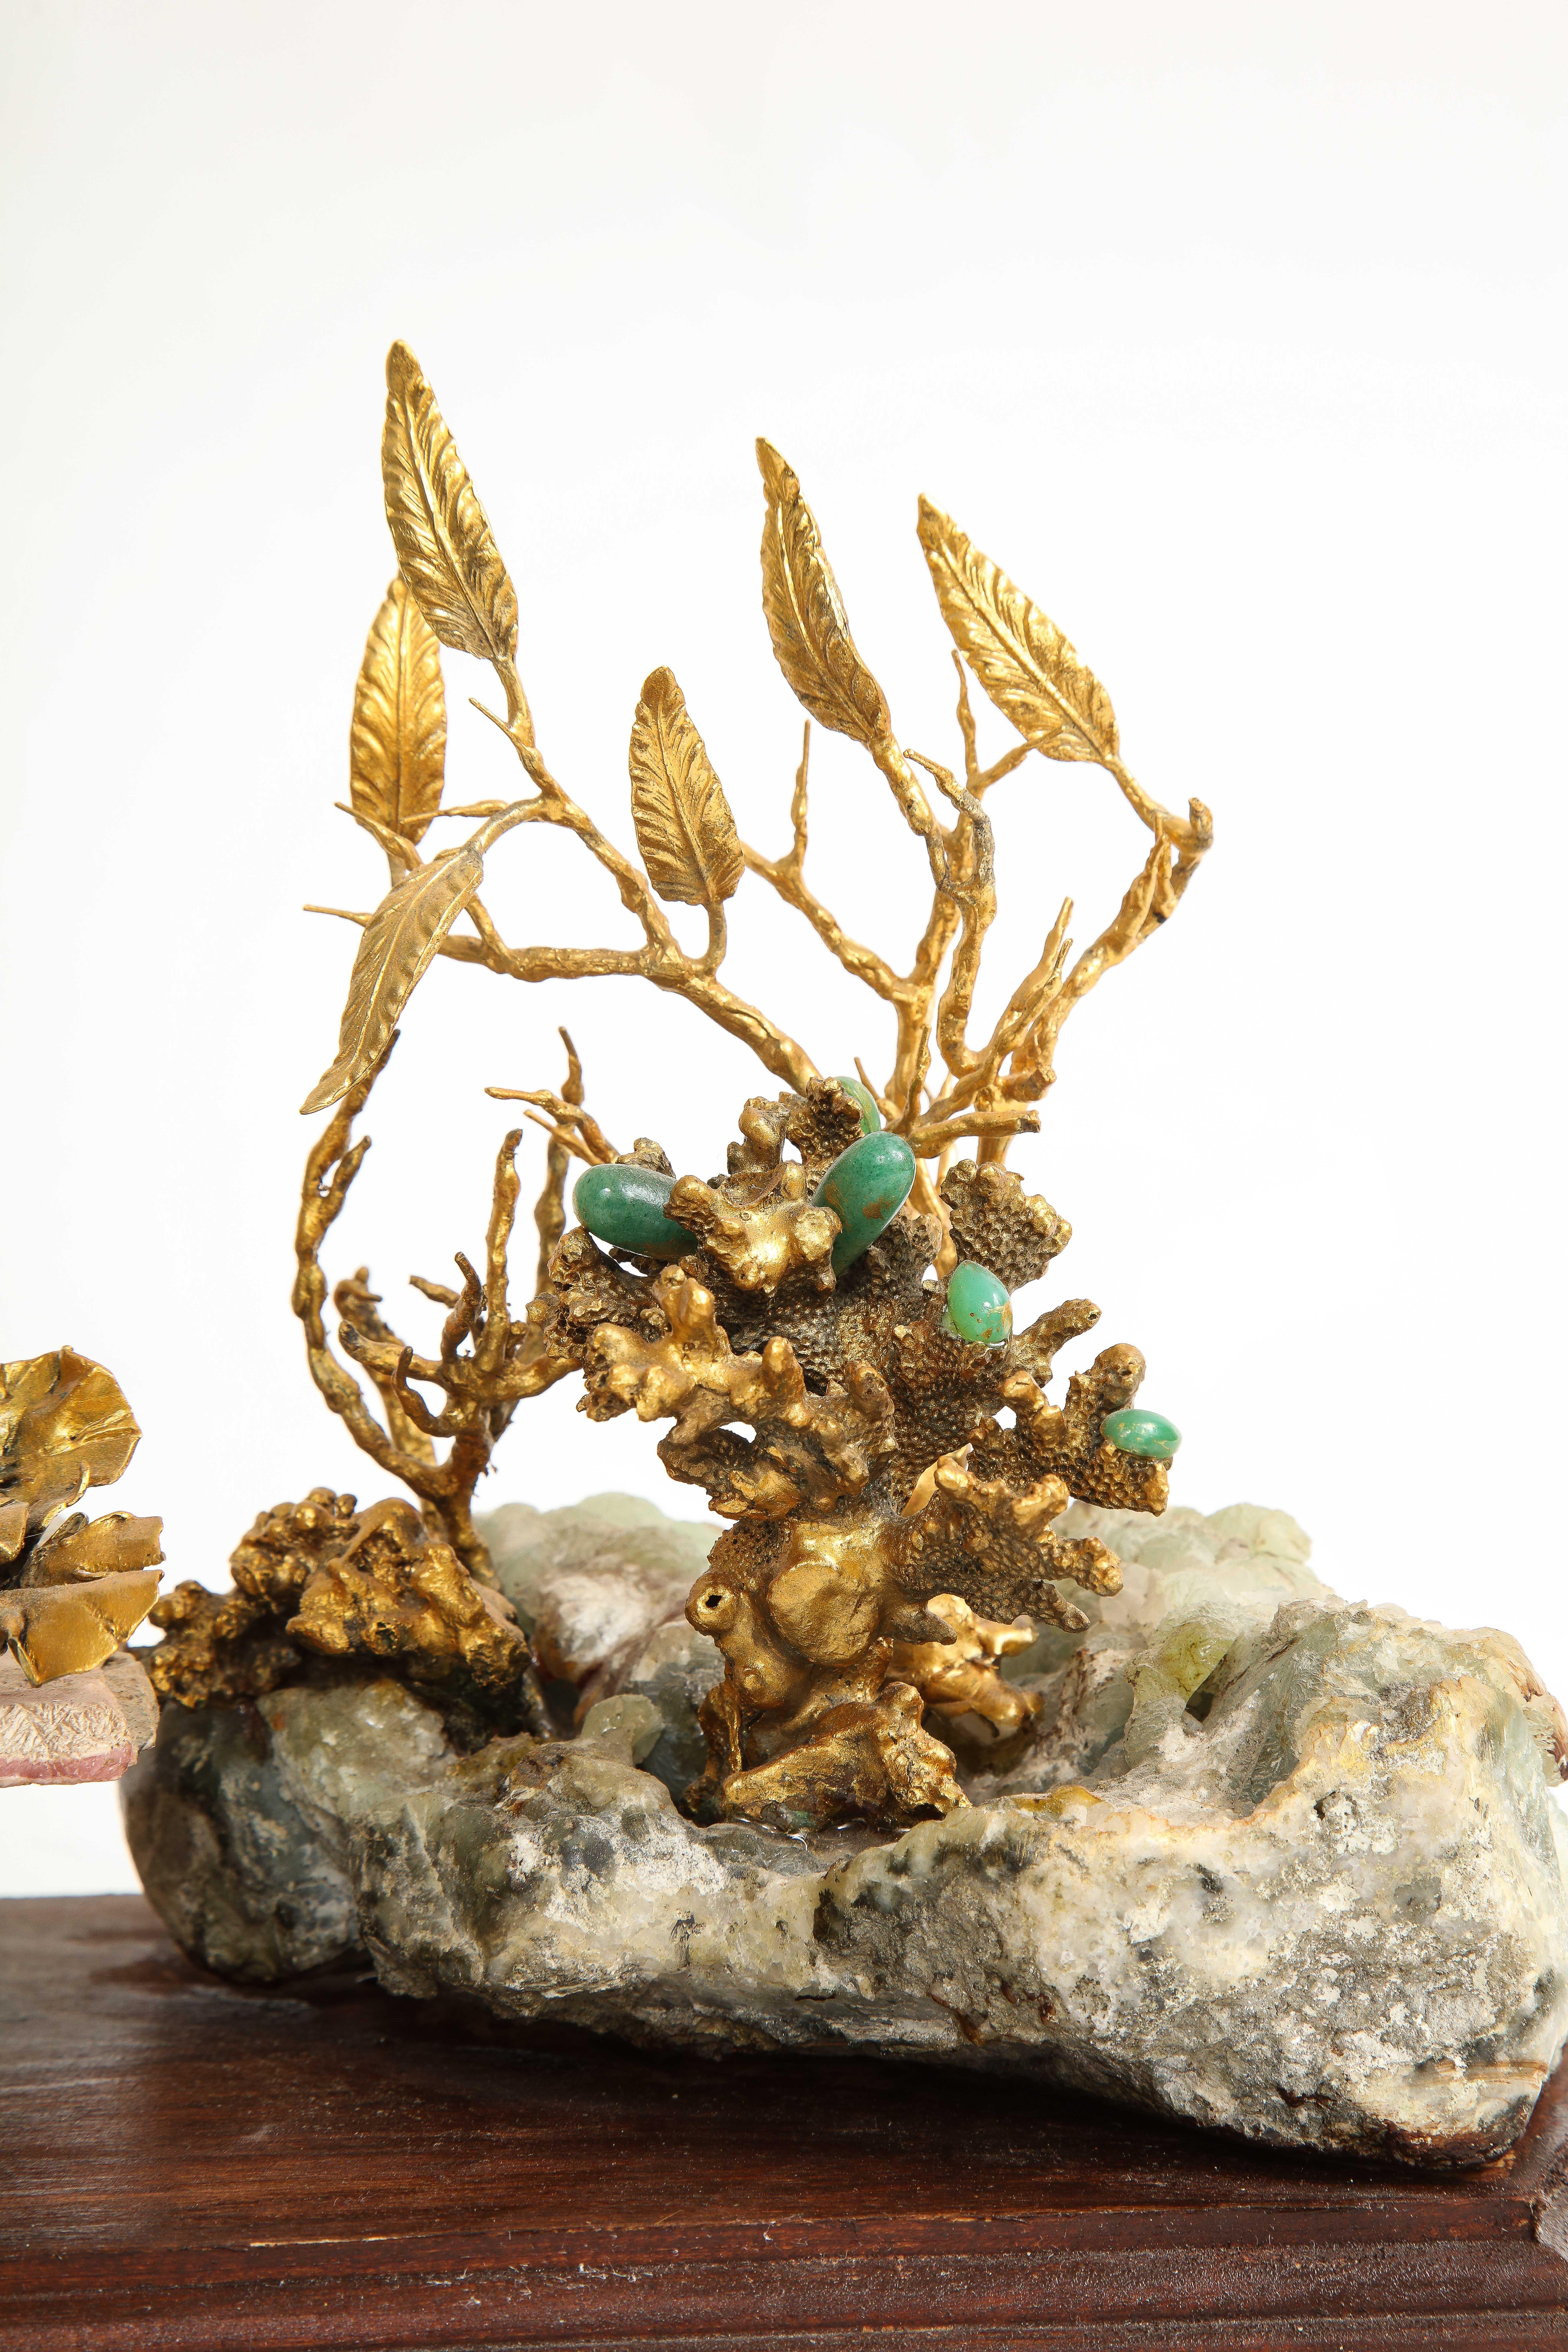 20th Century Chinese Jade, Cloisonné, & Gilt Metal Desk Accessory/Sculpture For Sale 6